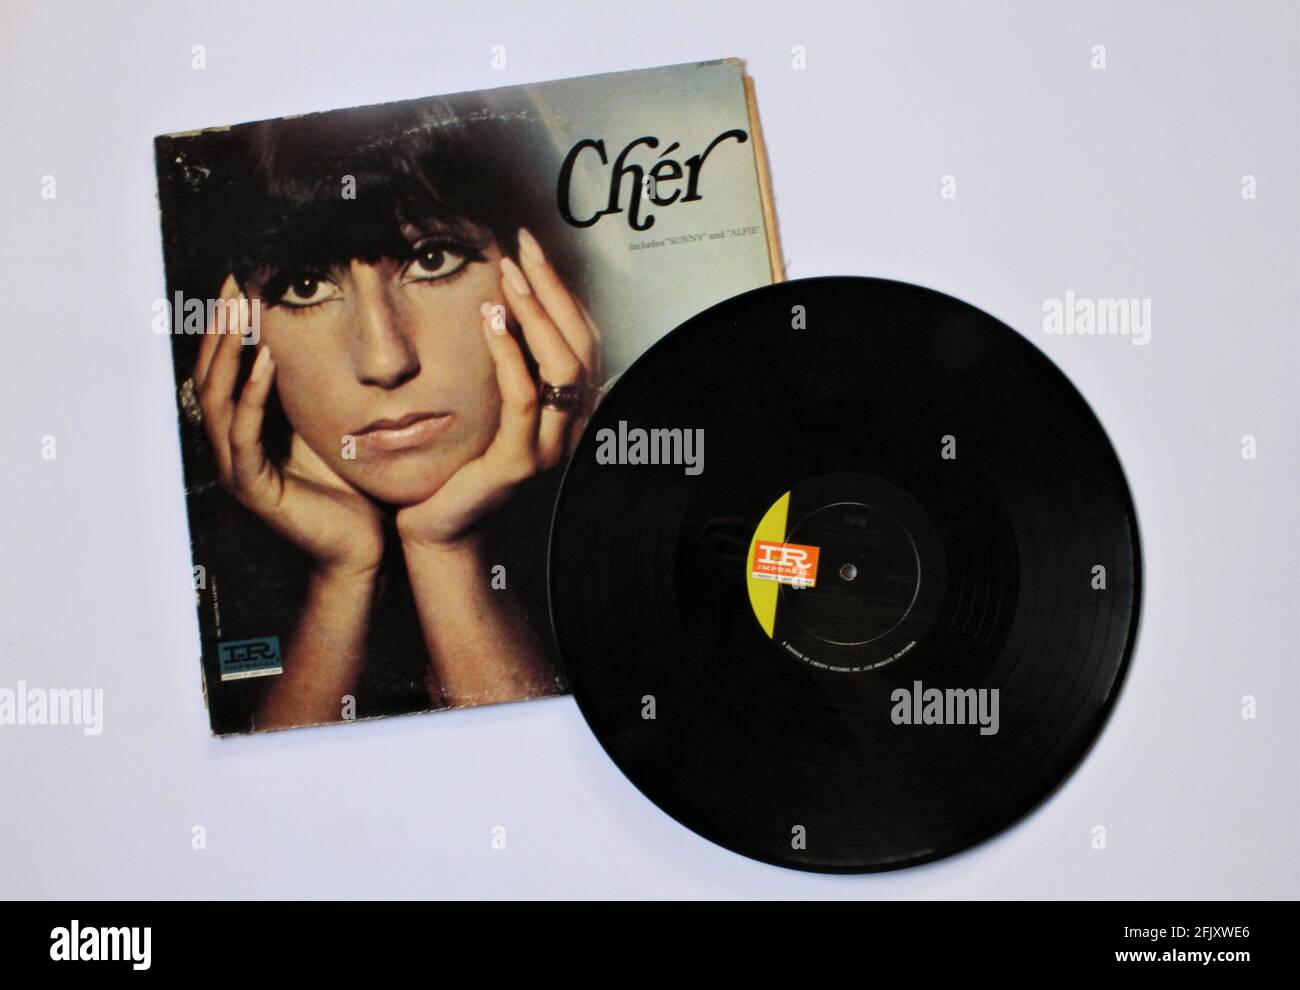 Pop and folk artist, Cher music album on vinyl record LP disc. Titled: Chér (Self titled, Cher) Stock Photo